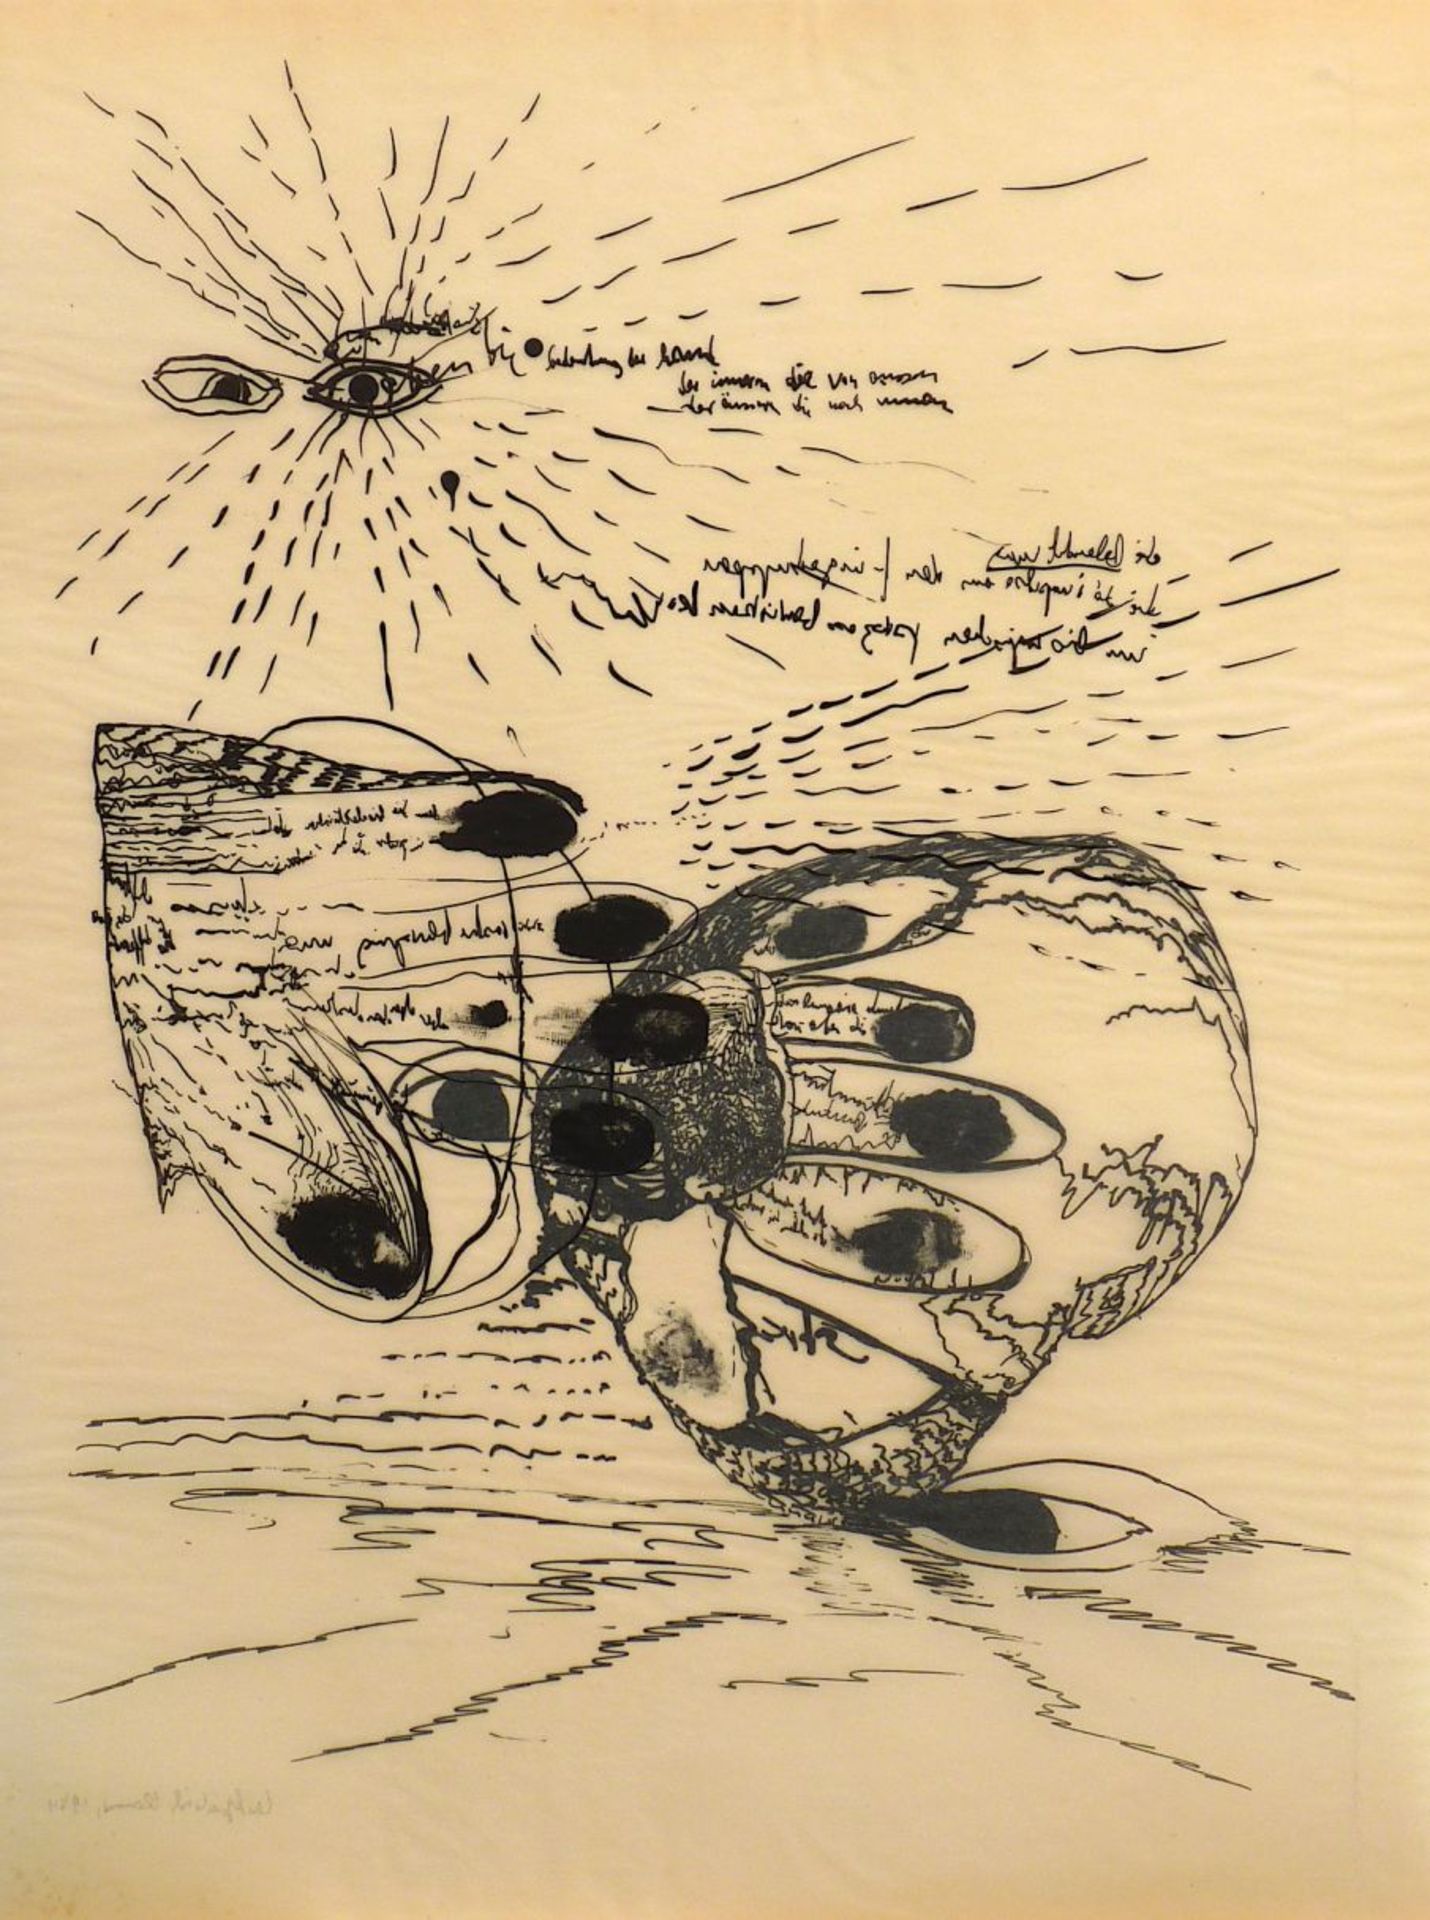 CLAUS, CARLFRIEDRICH: "Handreflexion", 1974